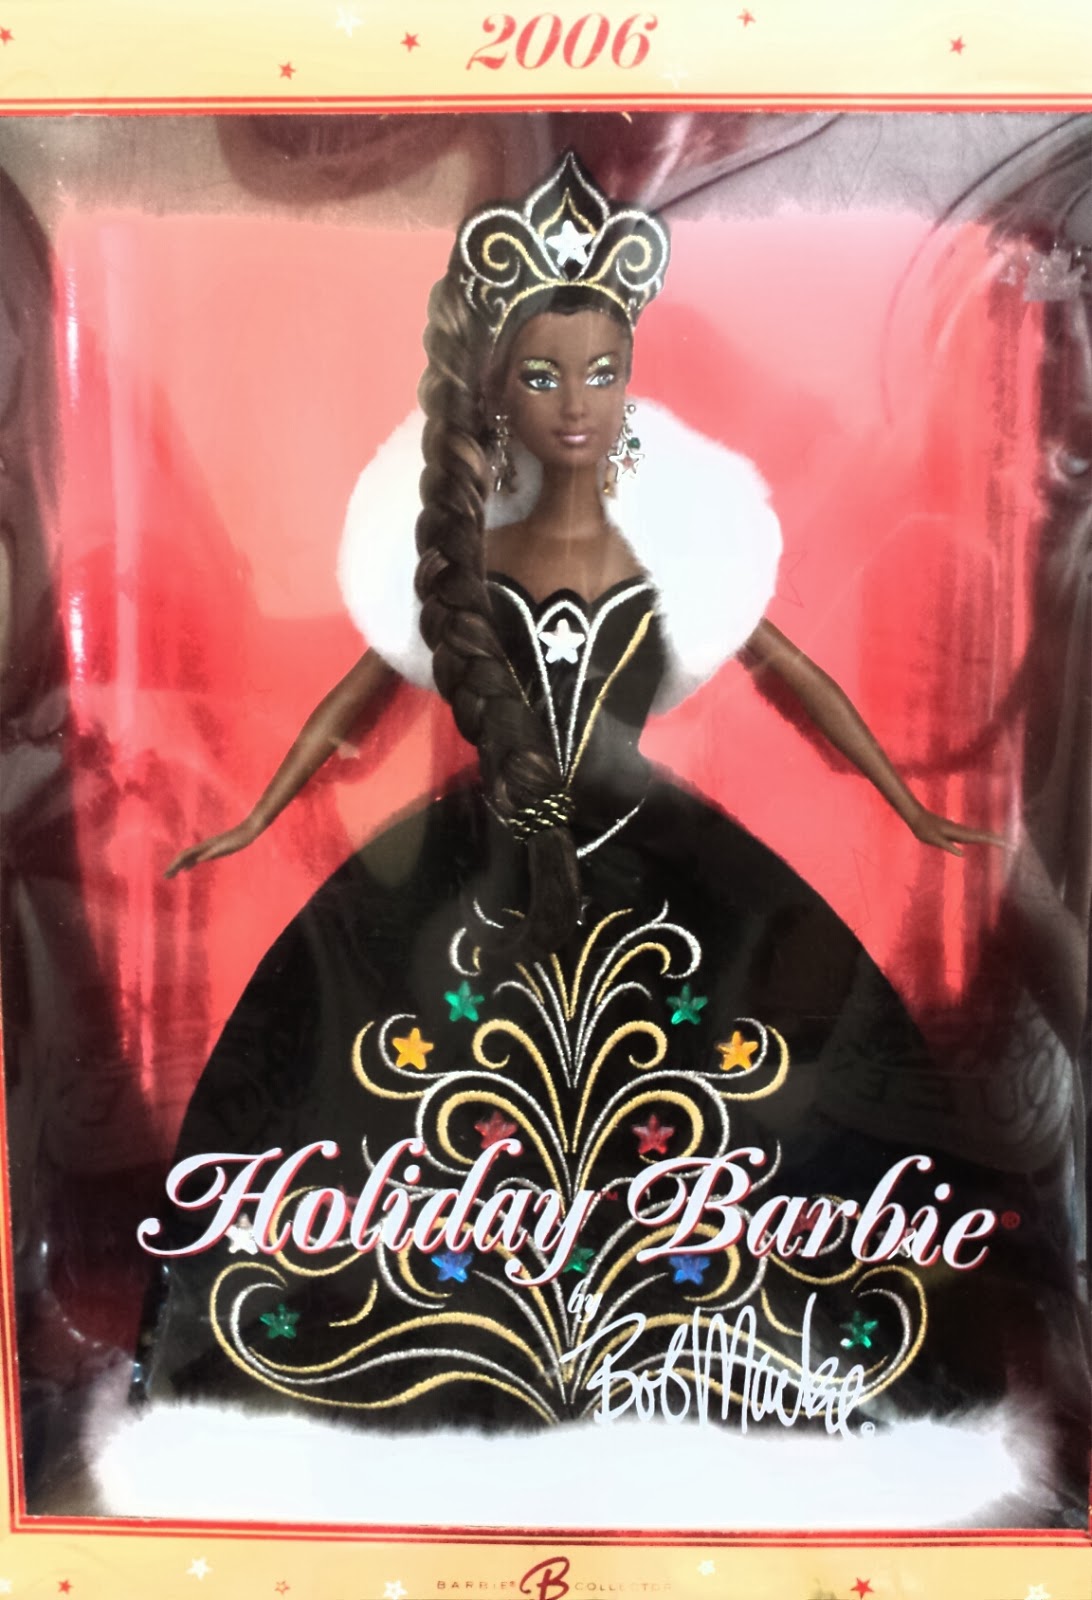 ¡Monas y monitos!: 2006 Holiday Barbie doll by Bob Mackie